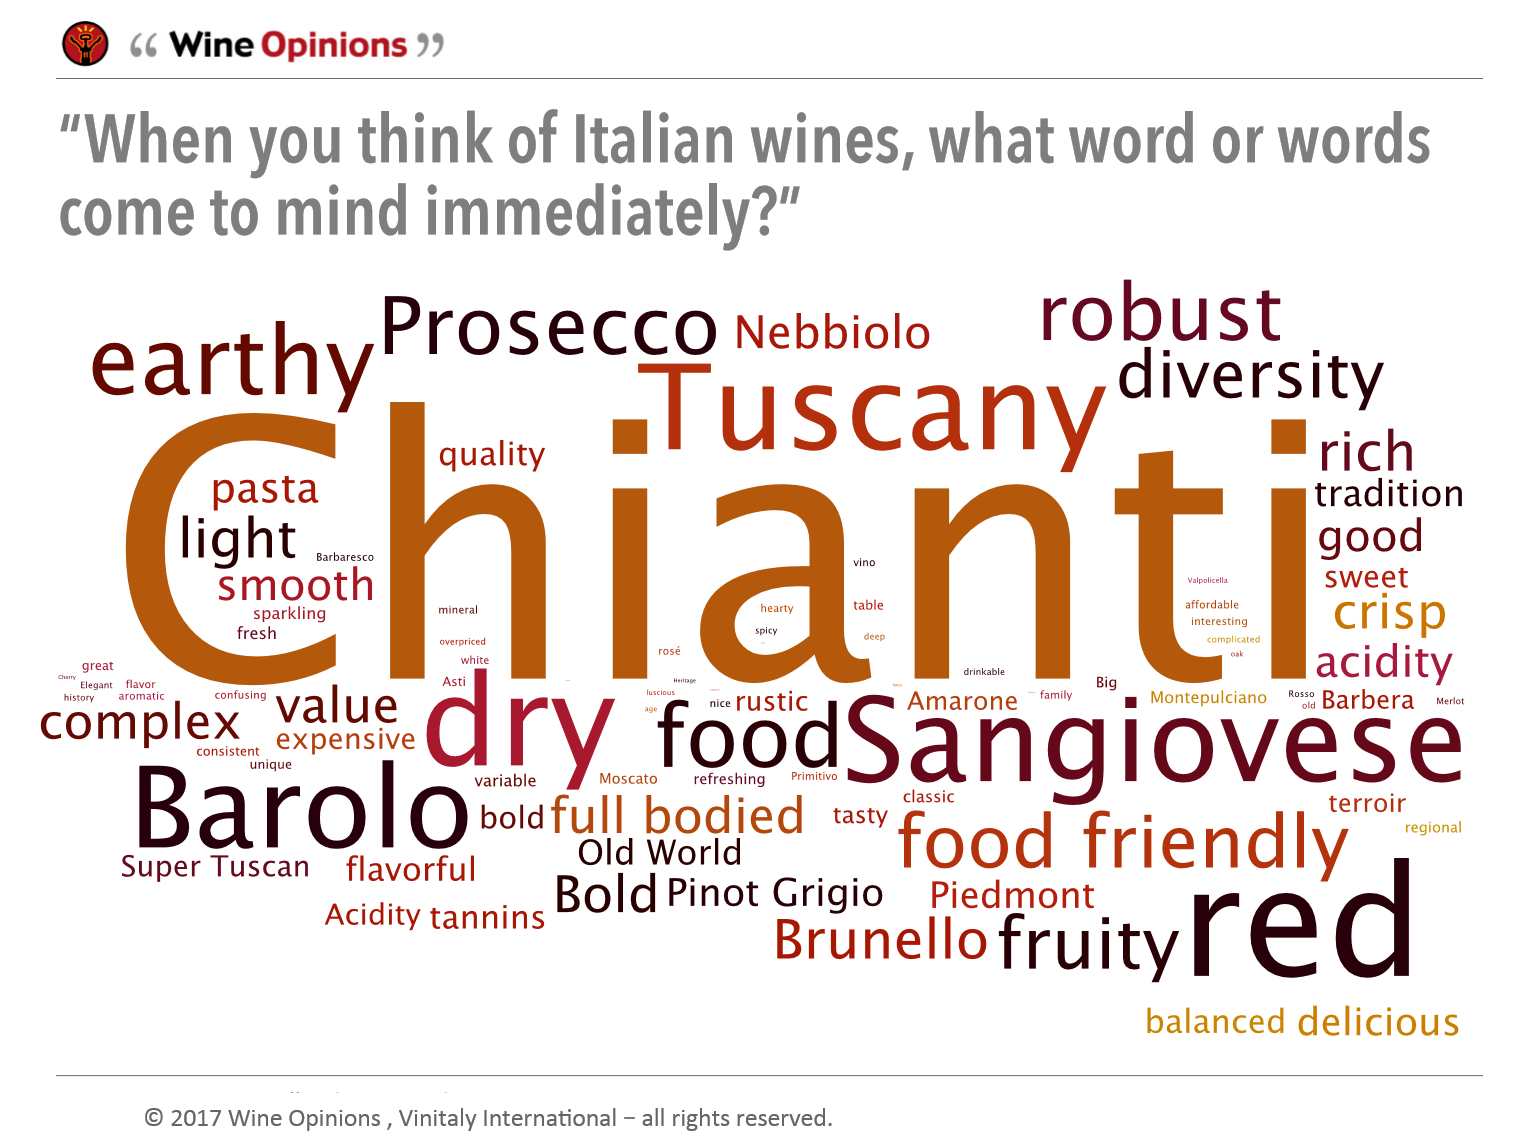 Wine opinions vinitaly international survey slide